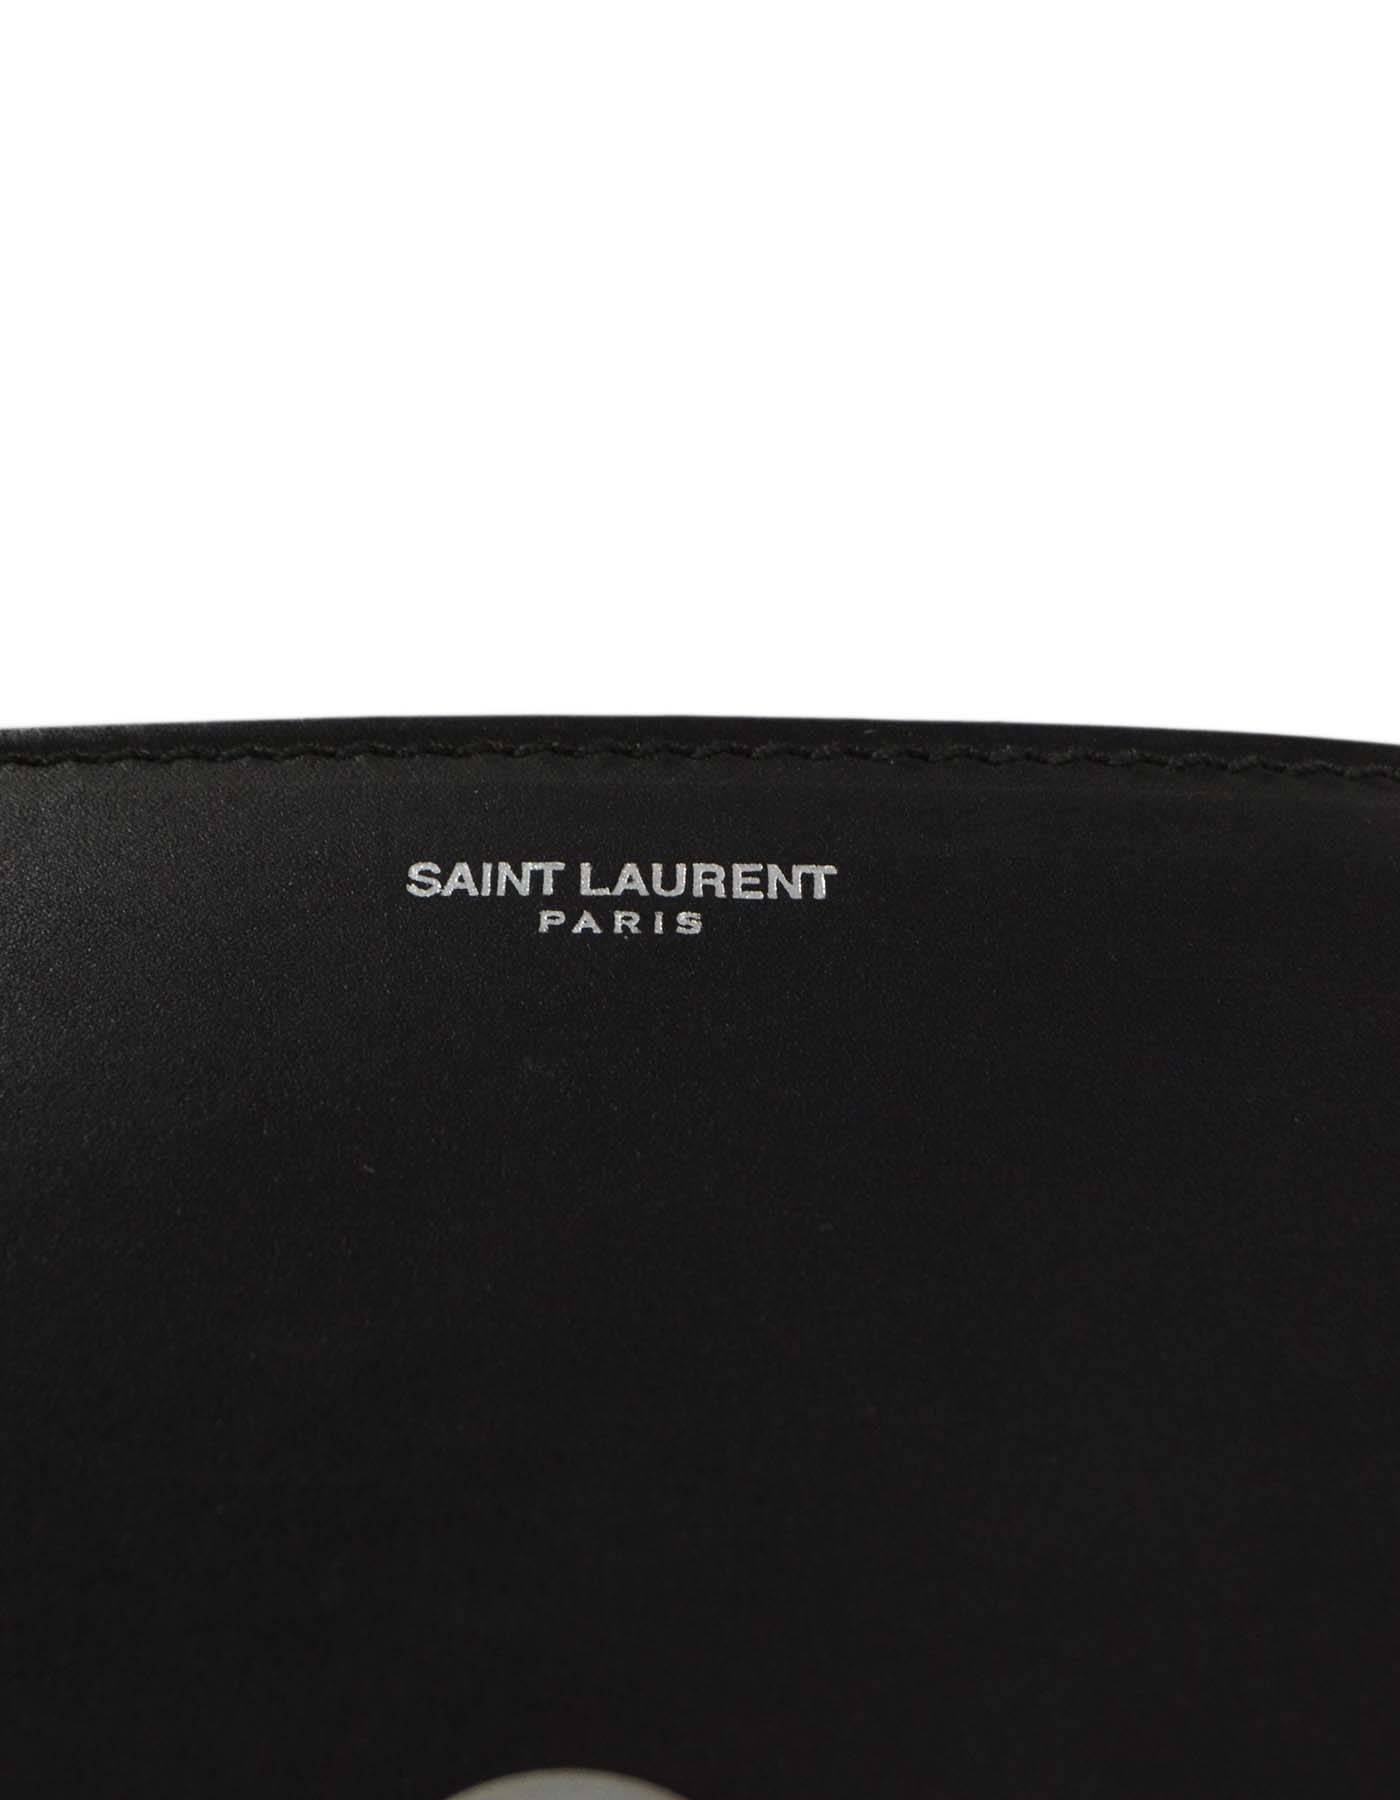 Saint Laurent Black Leather Small 'Betty' Crossbody Bag BHW 2